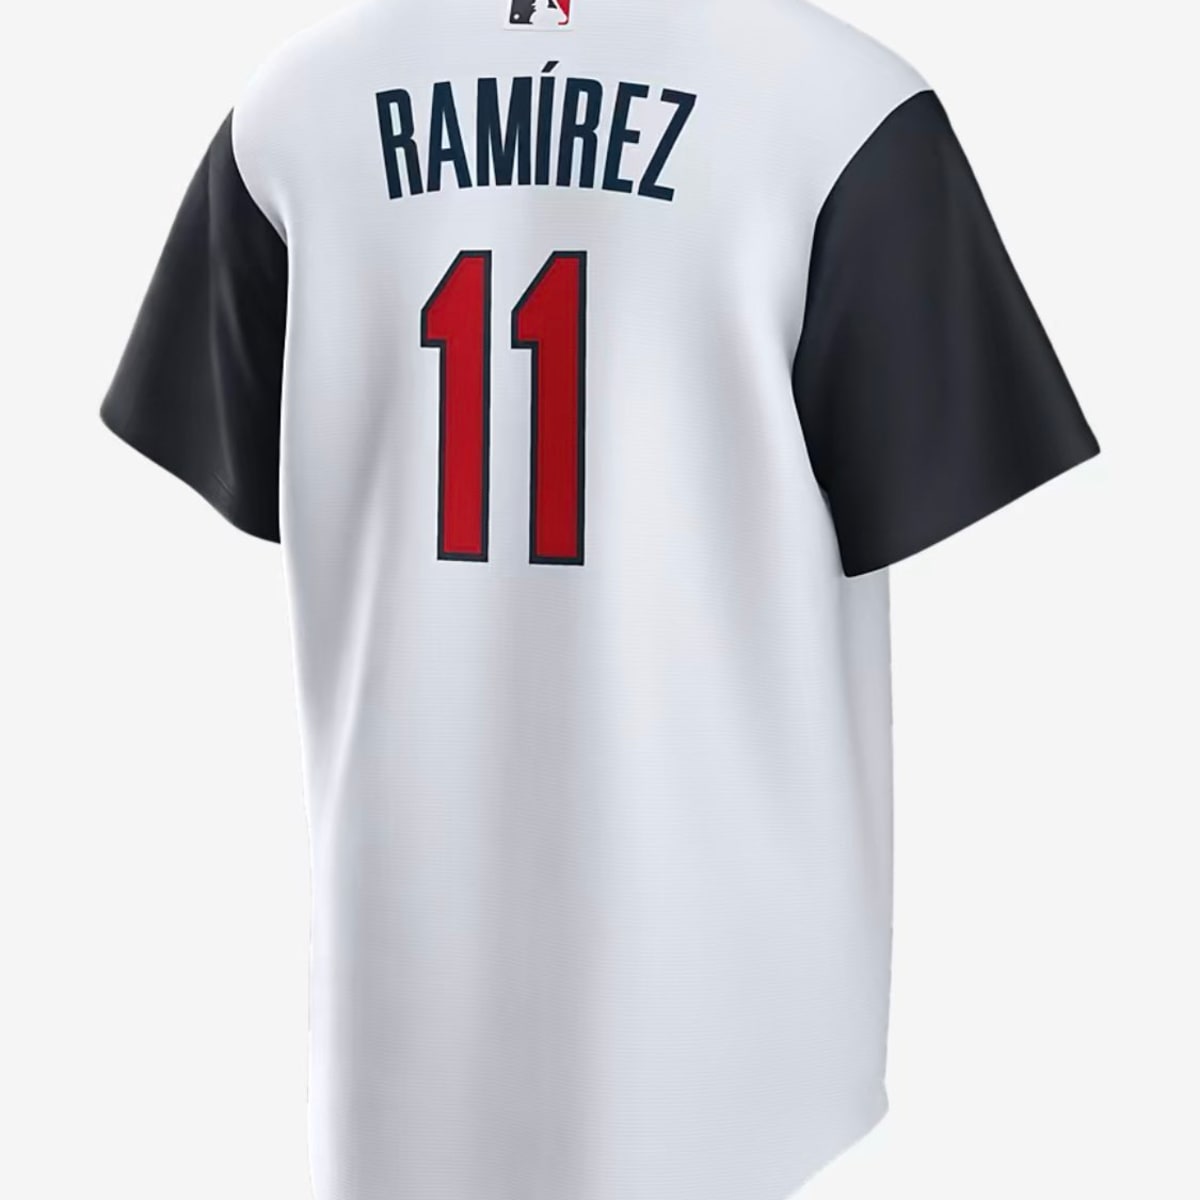 Cleveland Indians' 2021 Little League Classic jersey unveiled